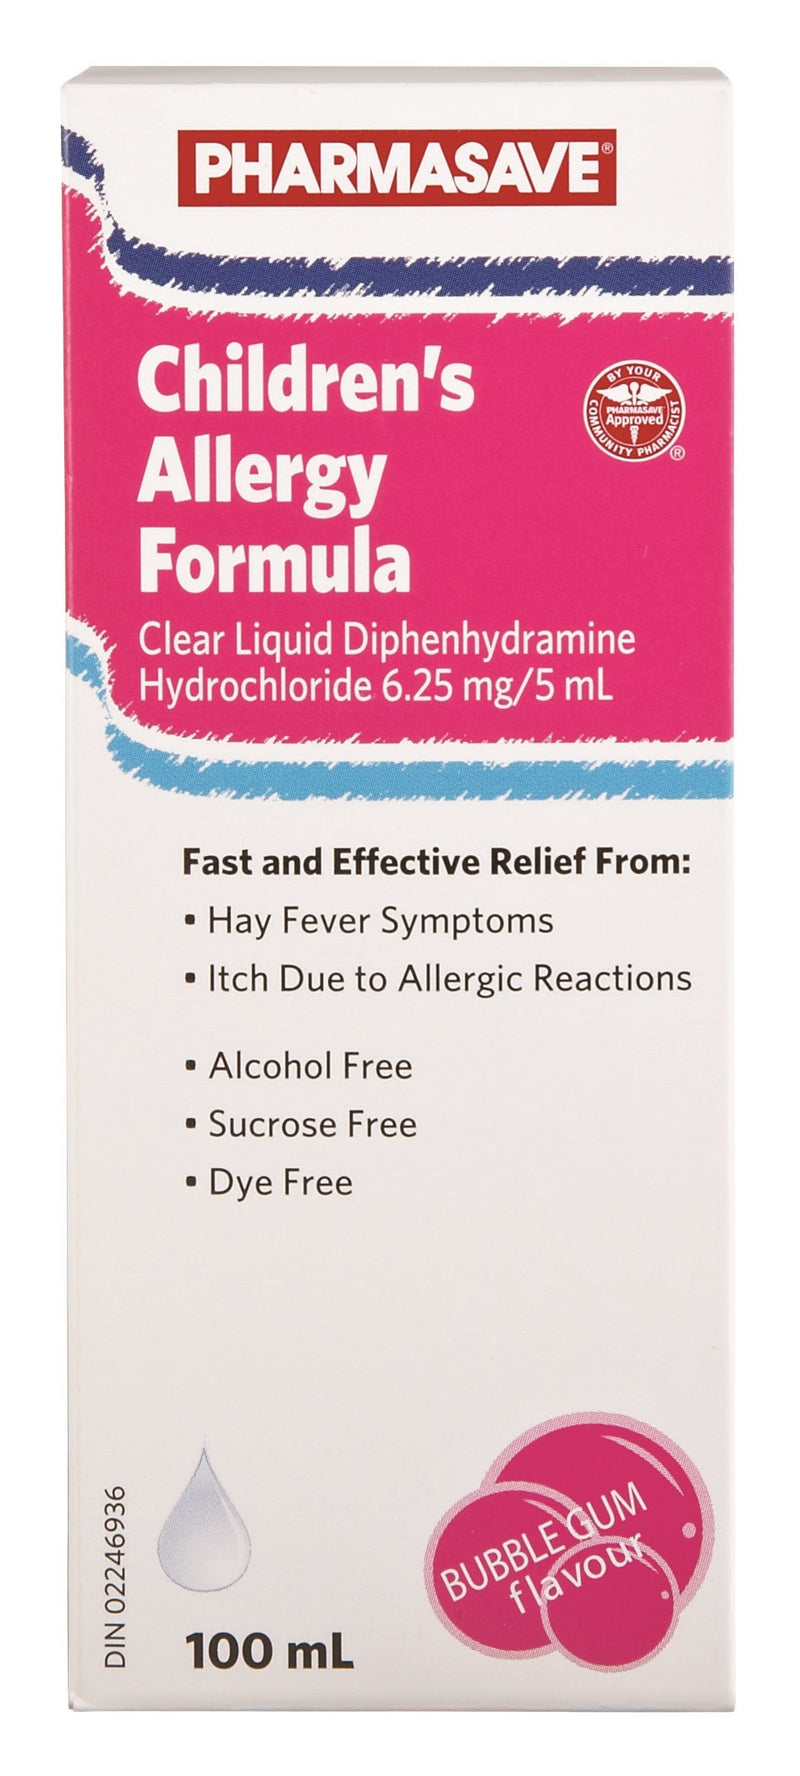 Pharmasave Children's Allergy Formula Bubblegum Flavour - 100mL - Simpsons Pharmacy